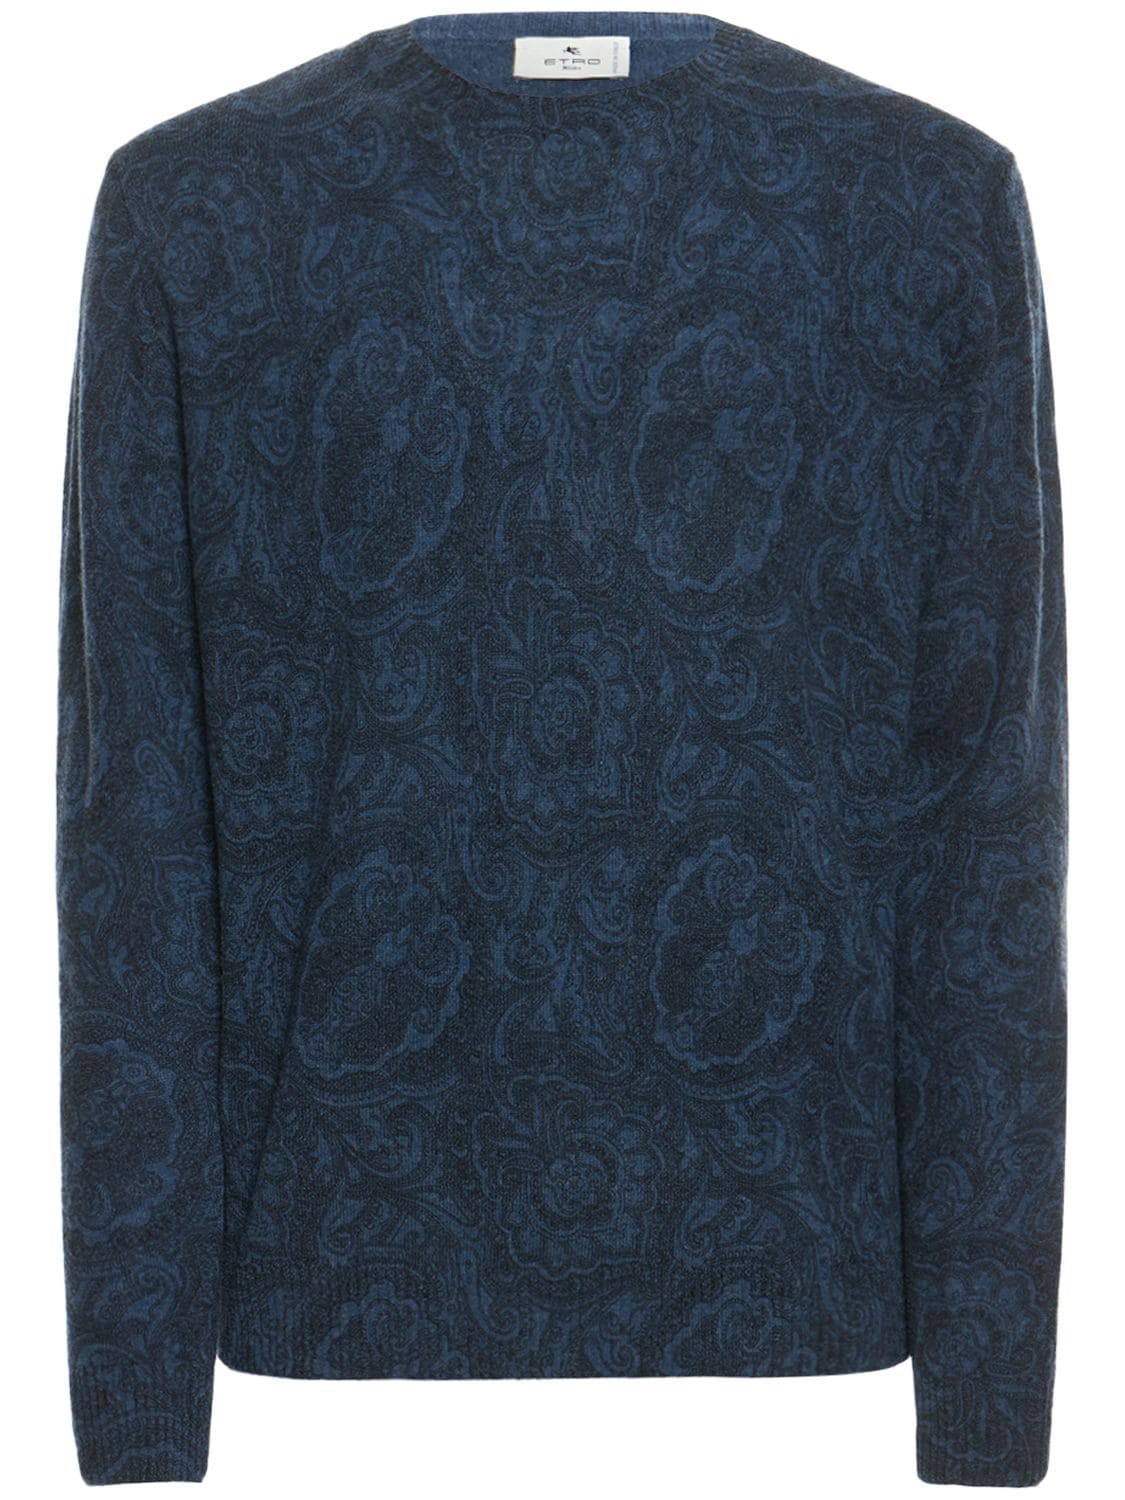 ETRO Paisley Print Wool Knit Crewneck Sweater